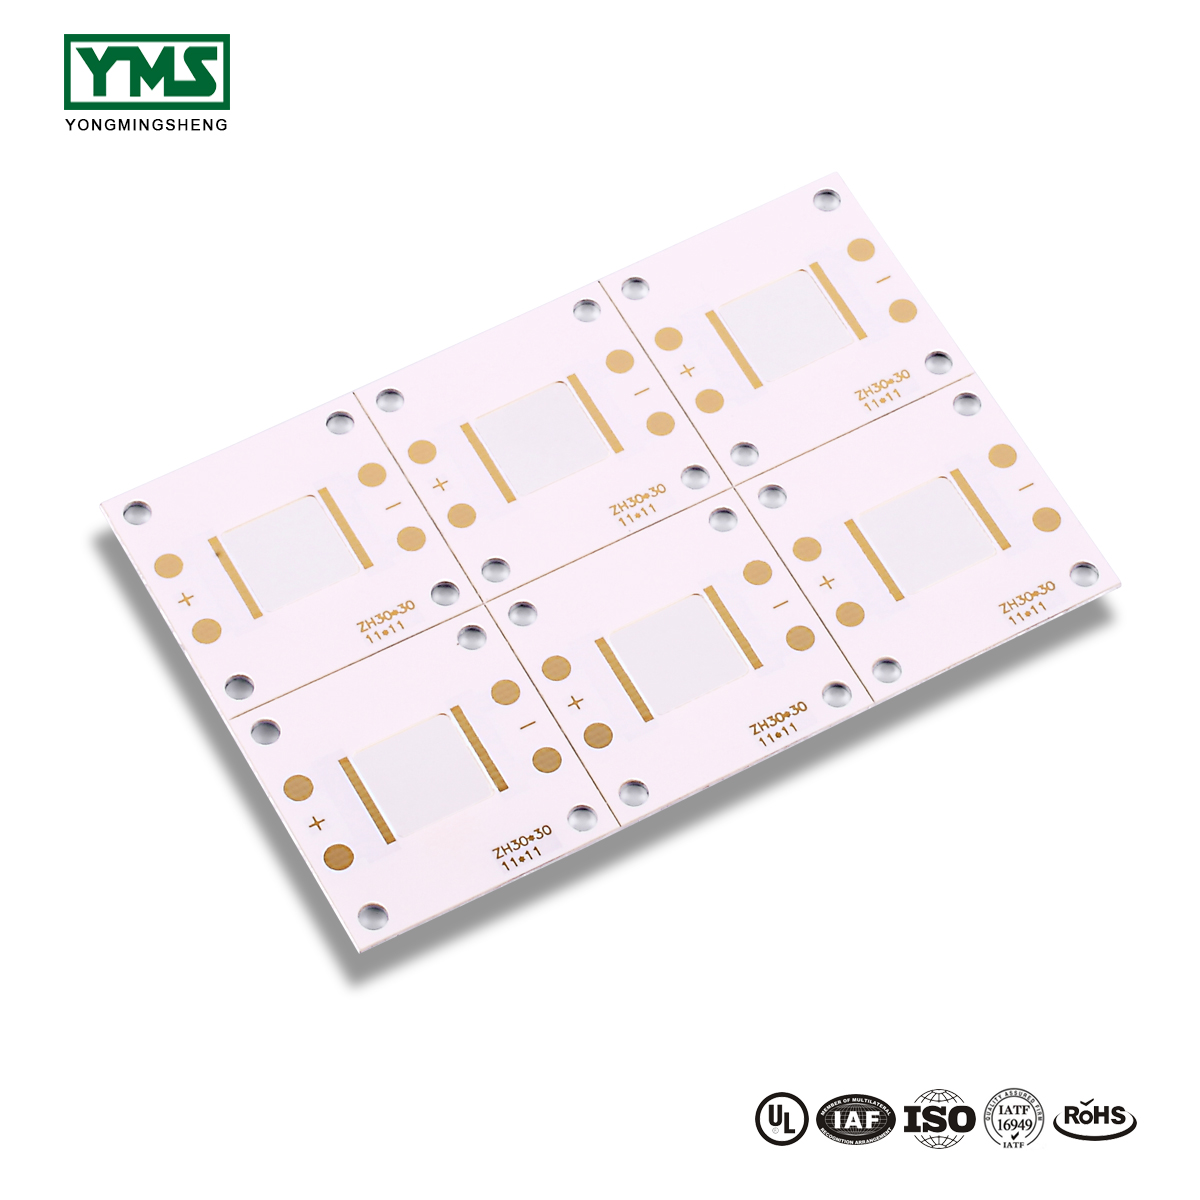 Good Quality Led Metal Core Pcb - 1Layer mirror Aluminum Base Board | YMSPCB – Yongmingsheng